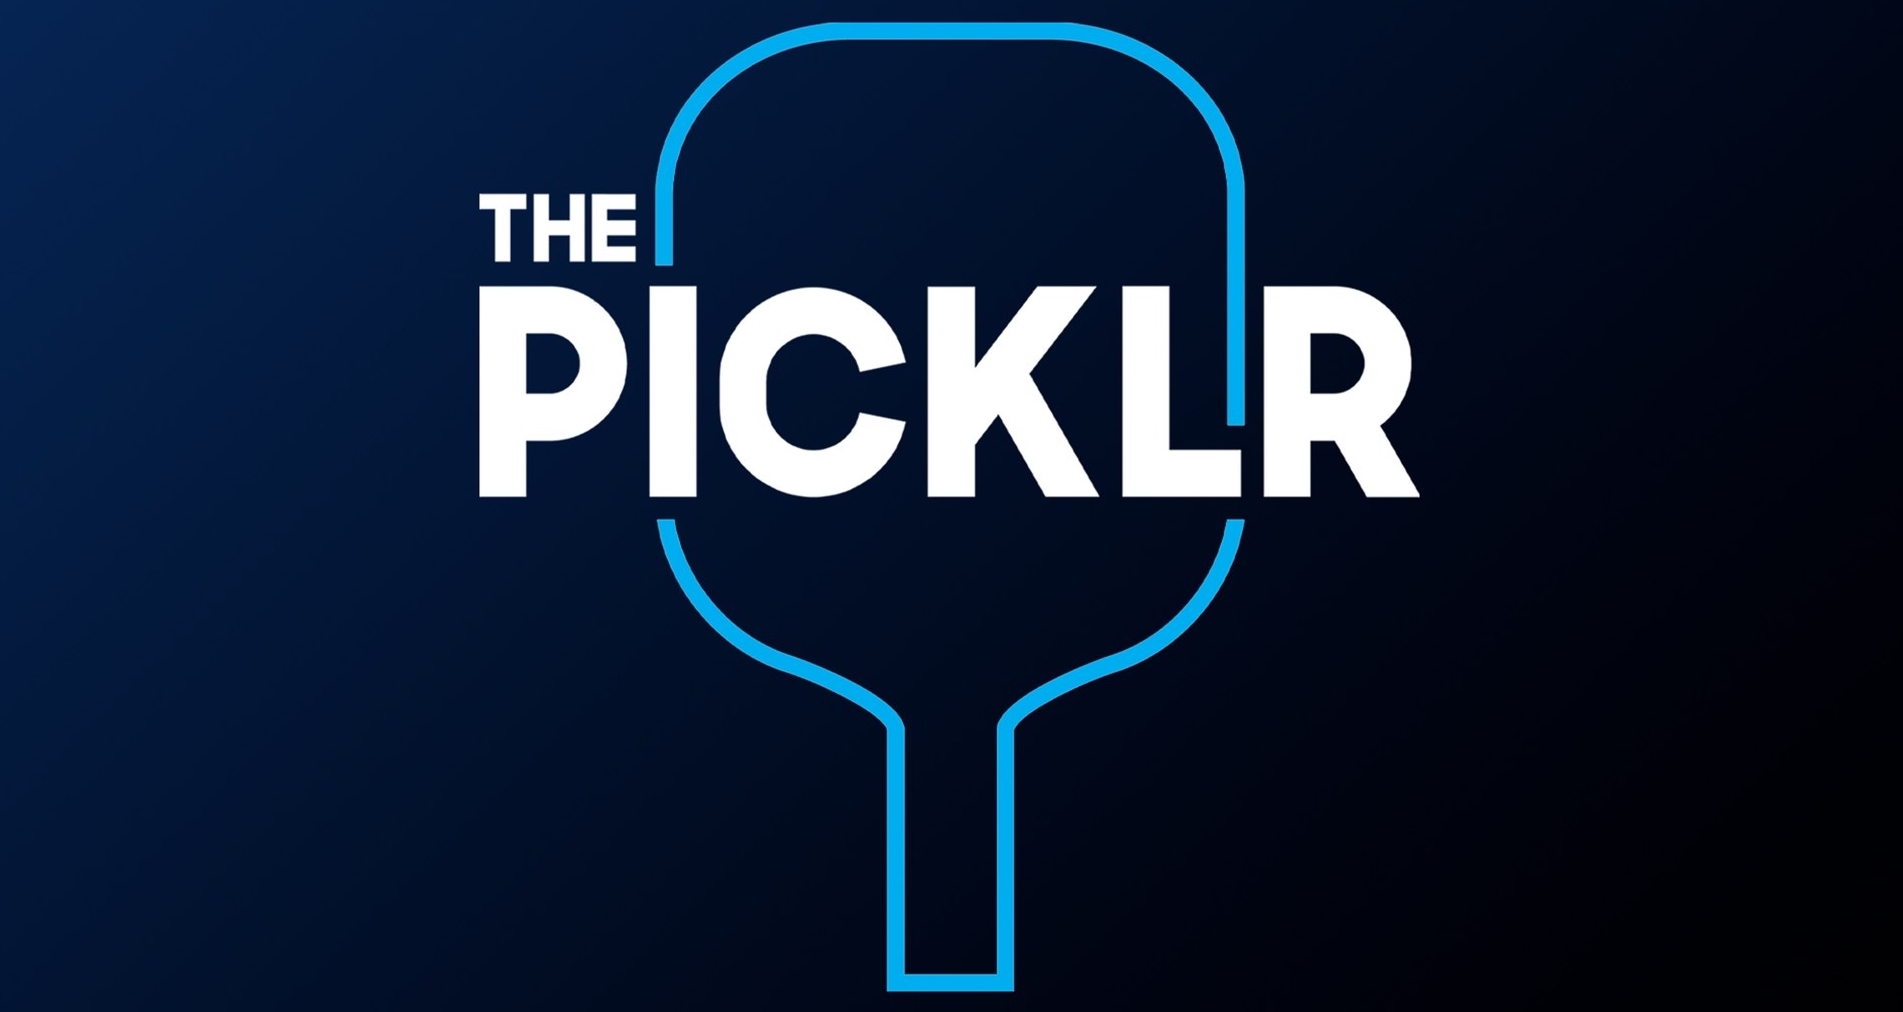 The Picklr logo